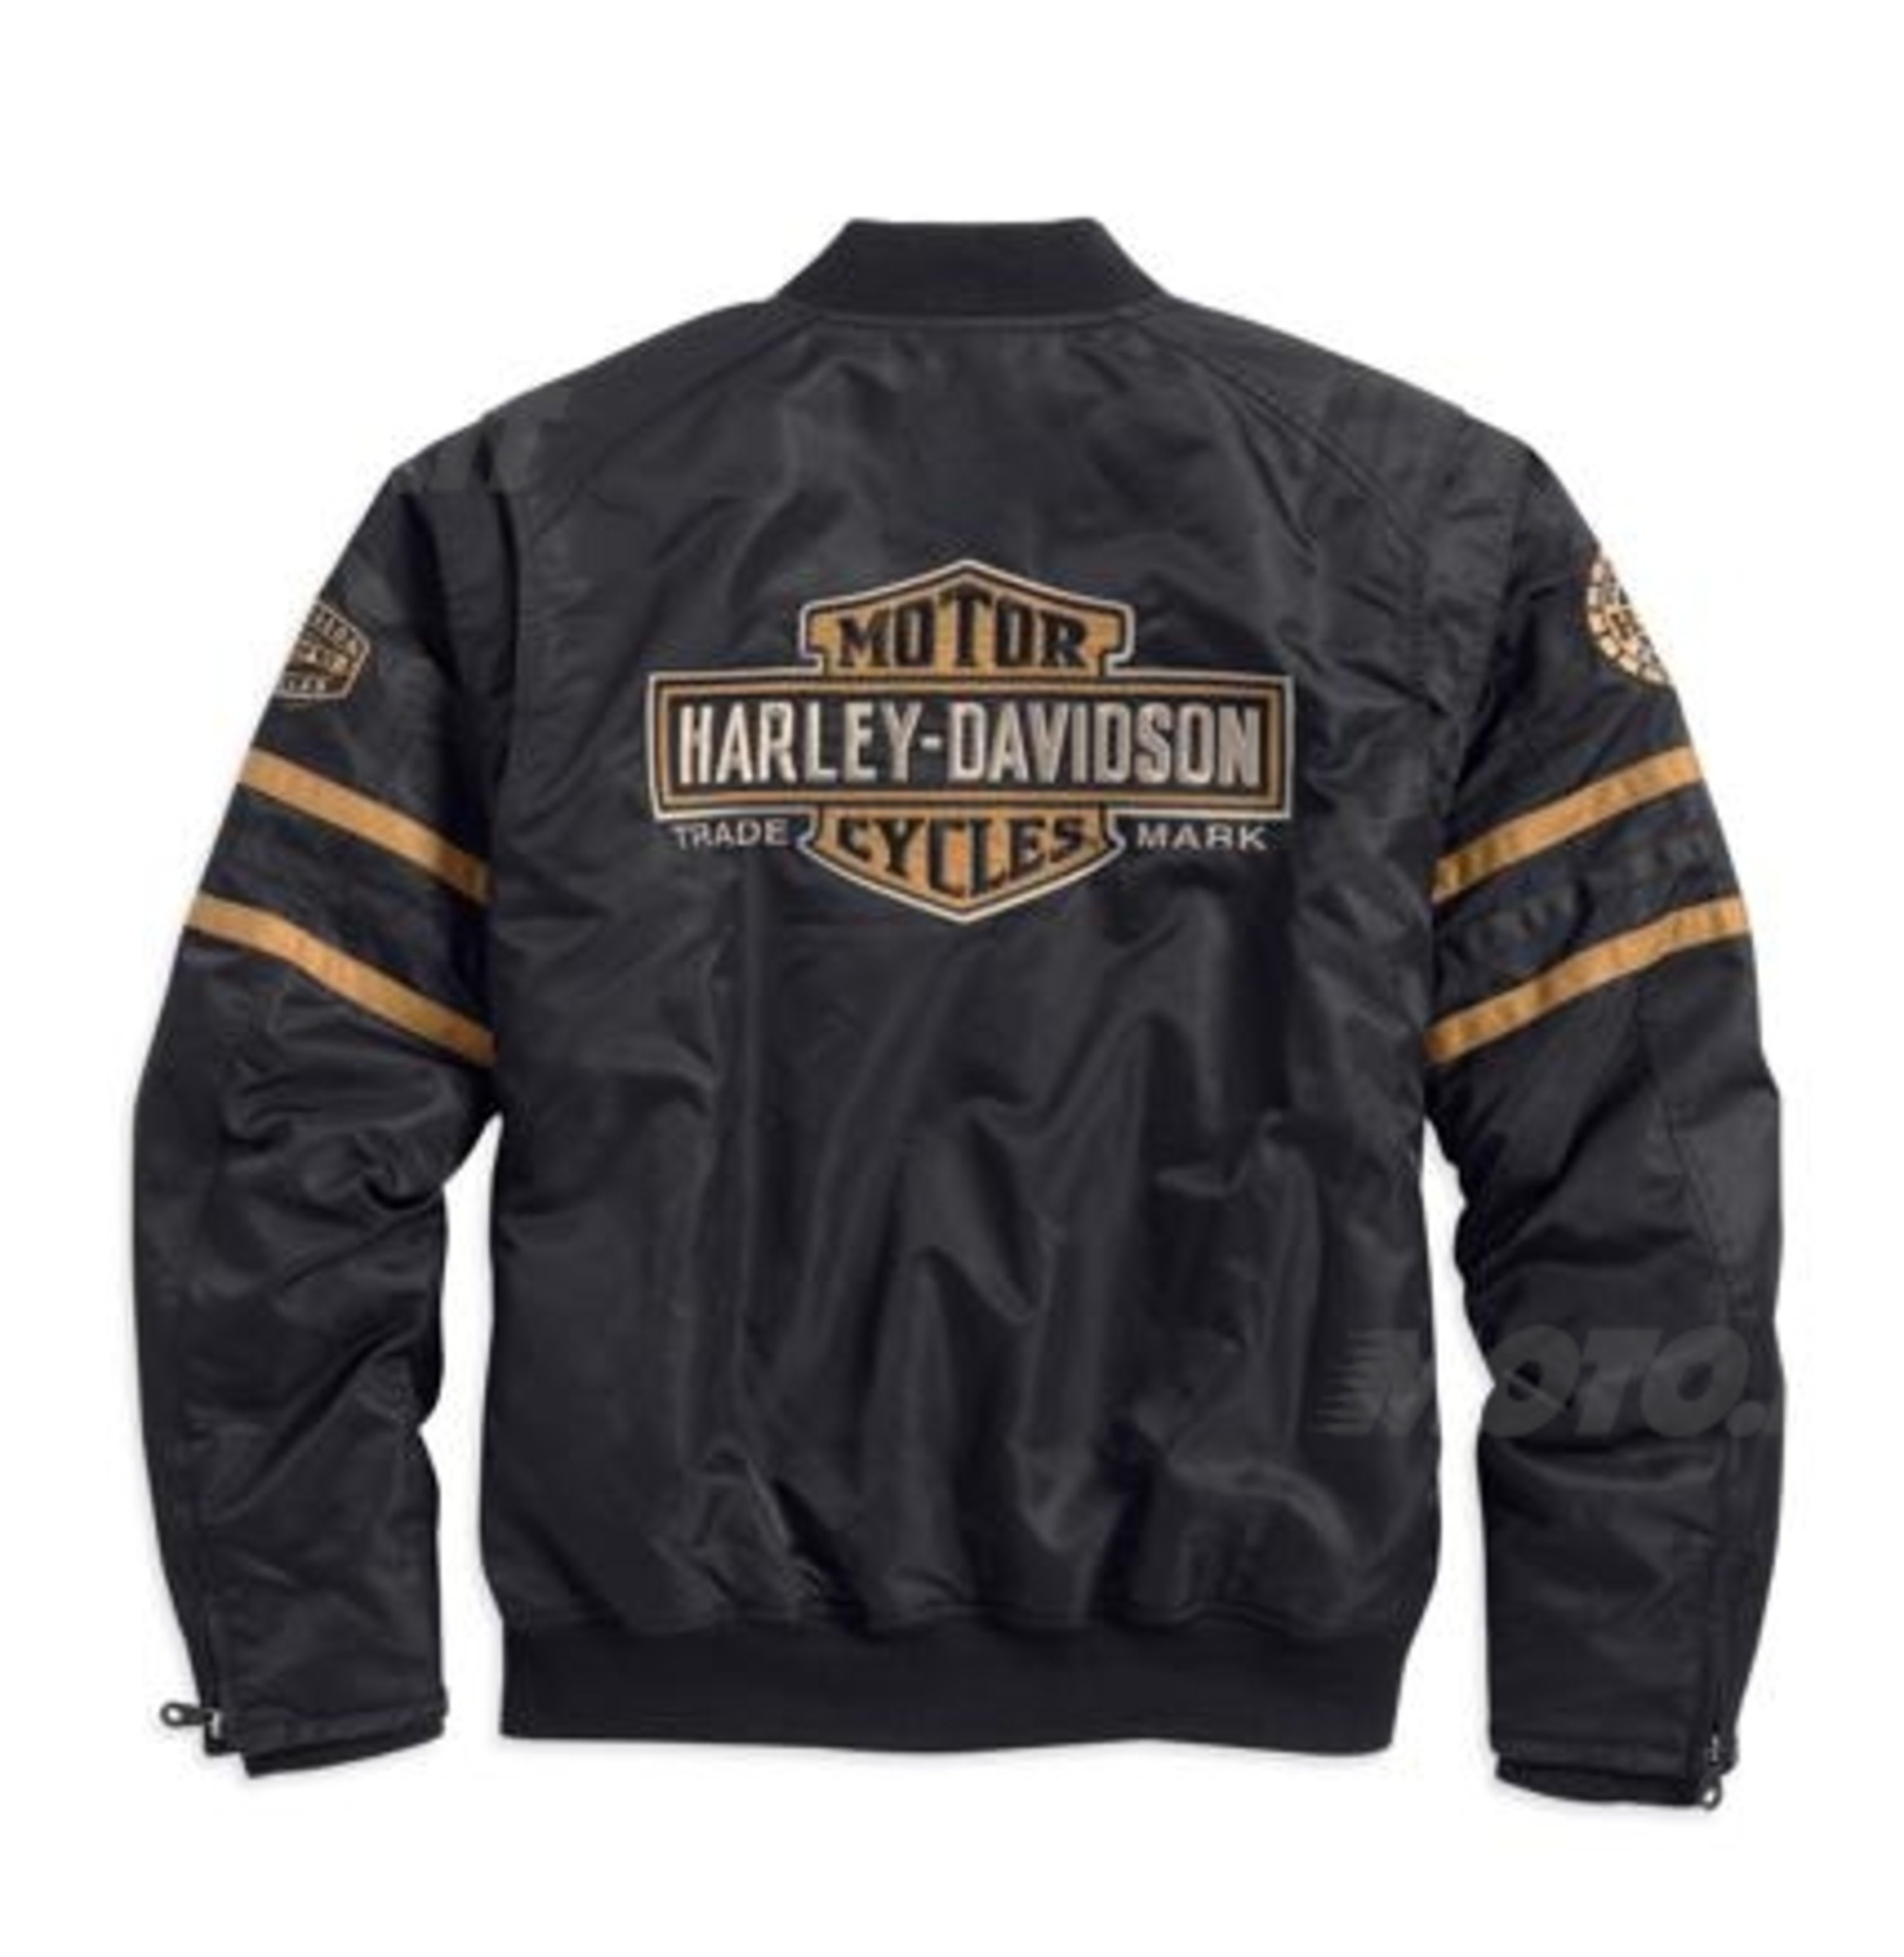 Harley-Davidson MotorClothes Winter 2013, le proposte per lui